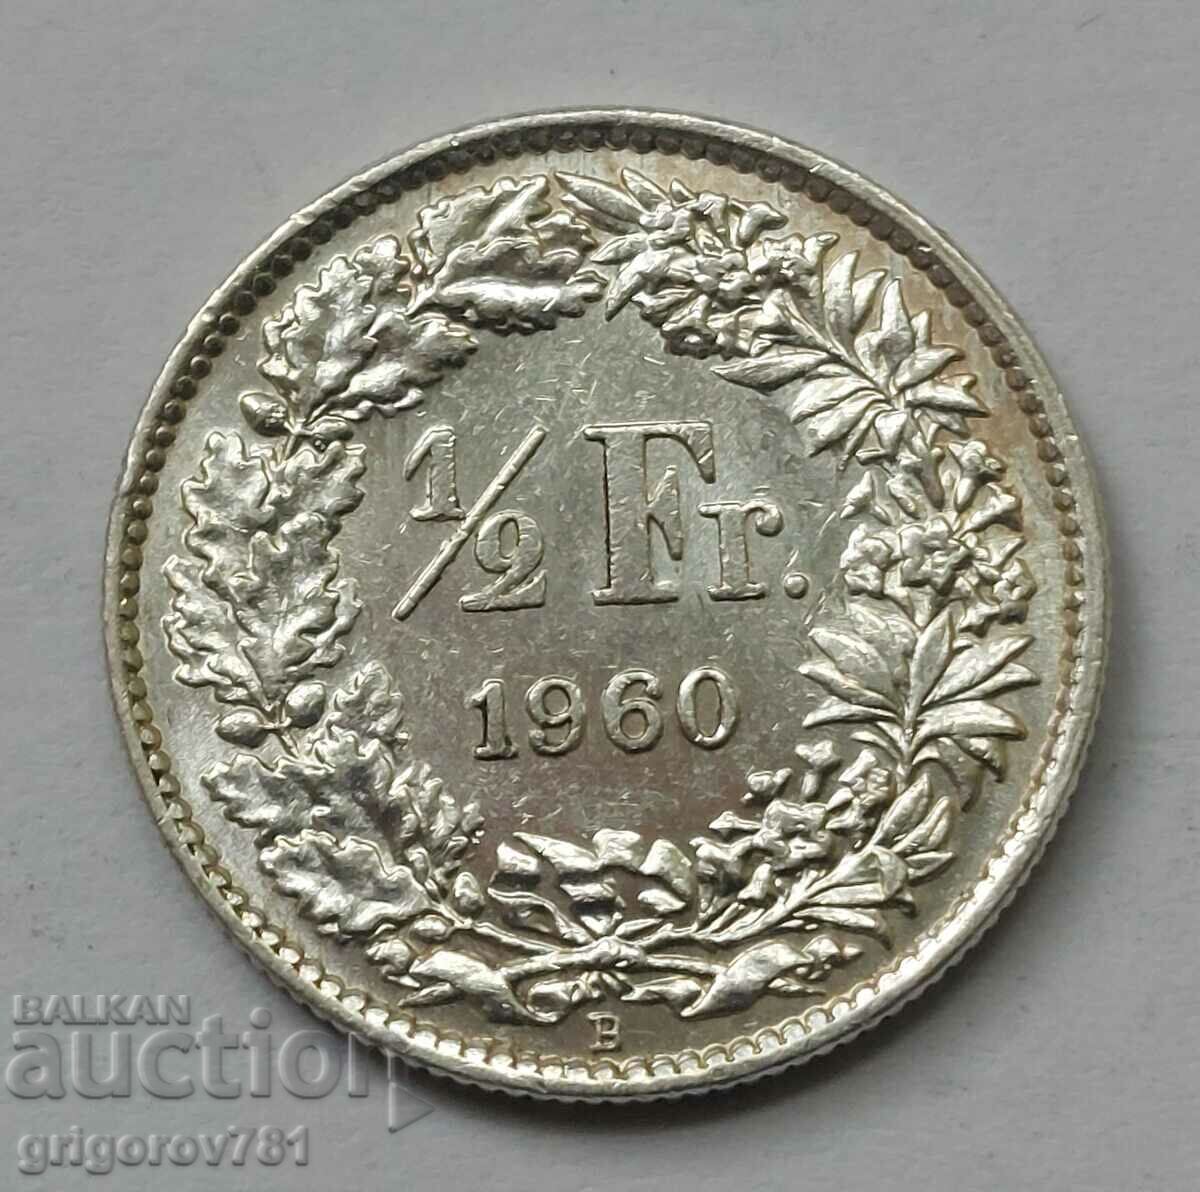 1/2 Franc Silver Switzerland 1960 B - Silver Coin #92